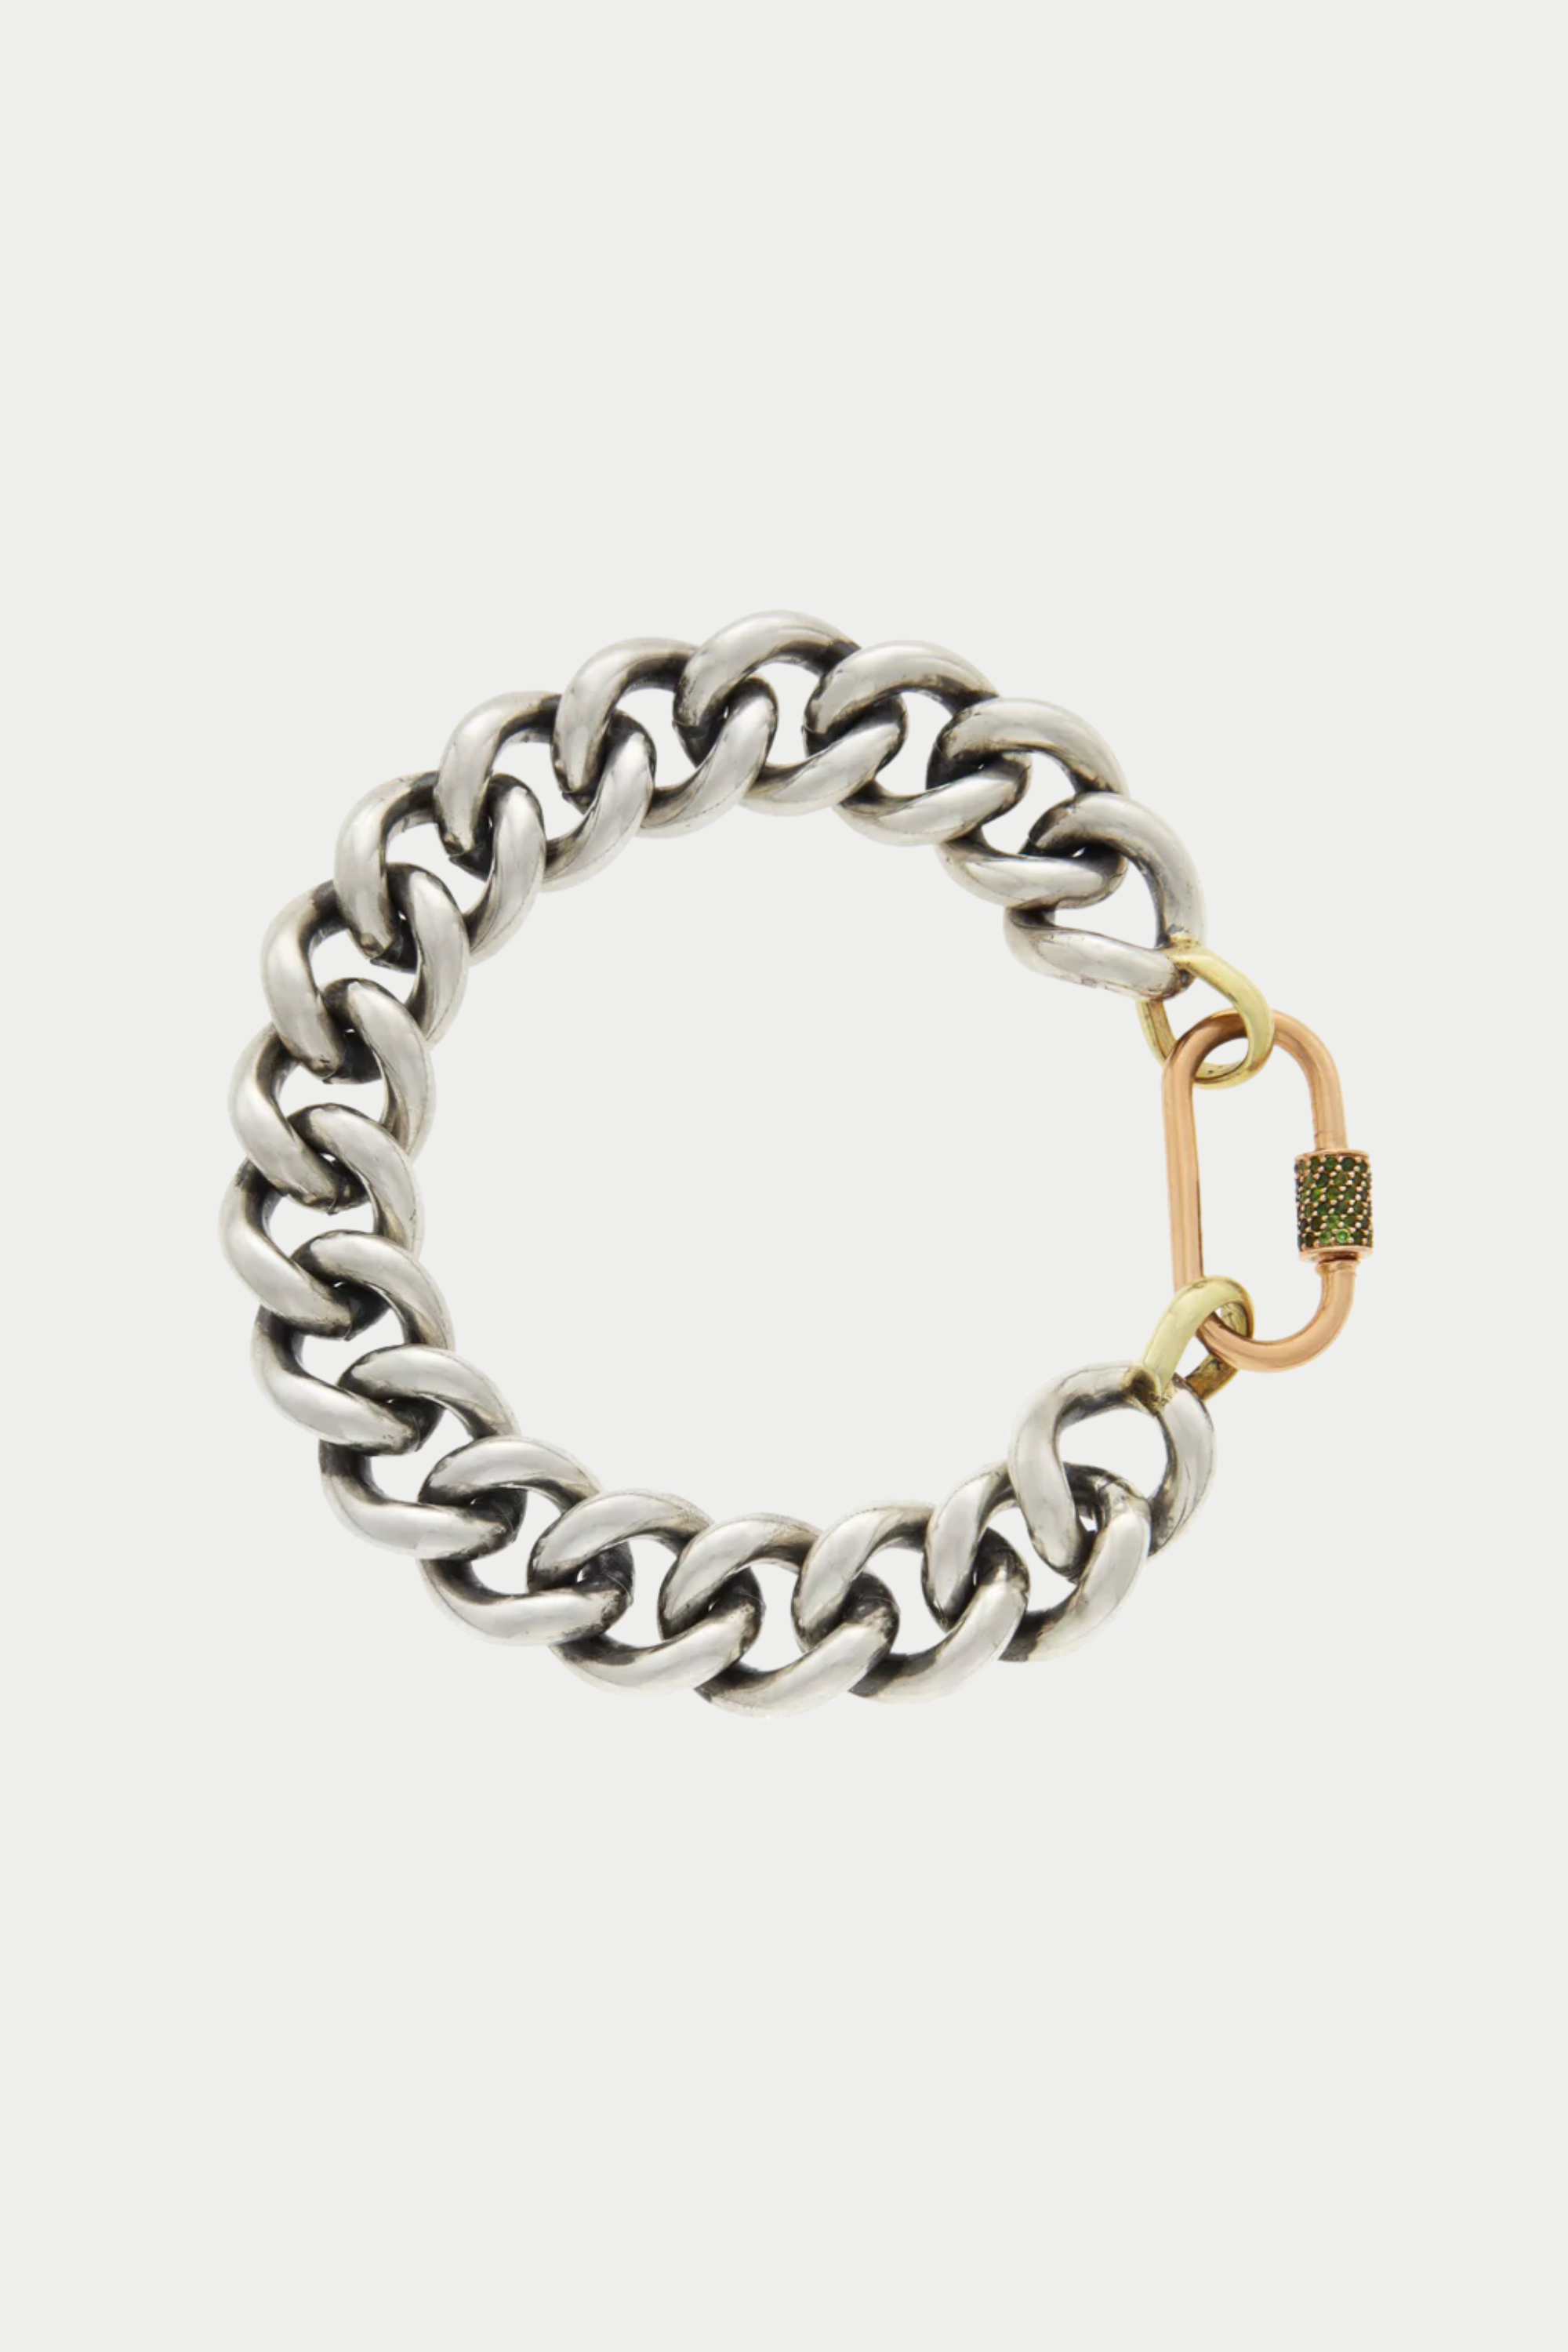 Marla Aaron Mega Curb Chain Bracelet